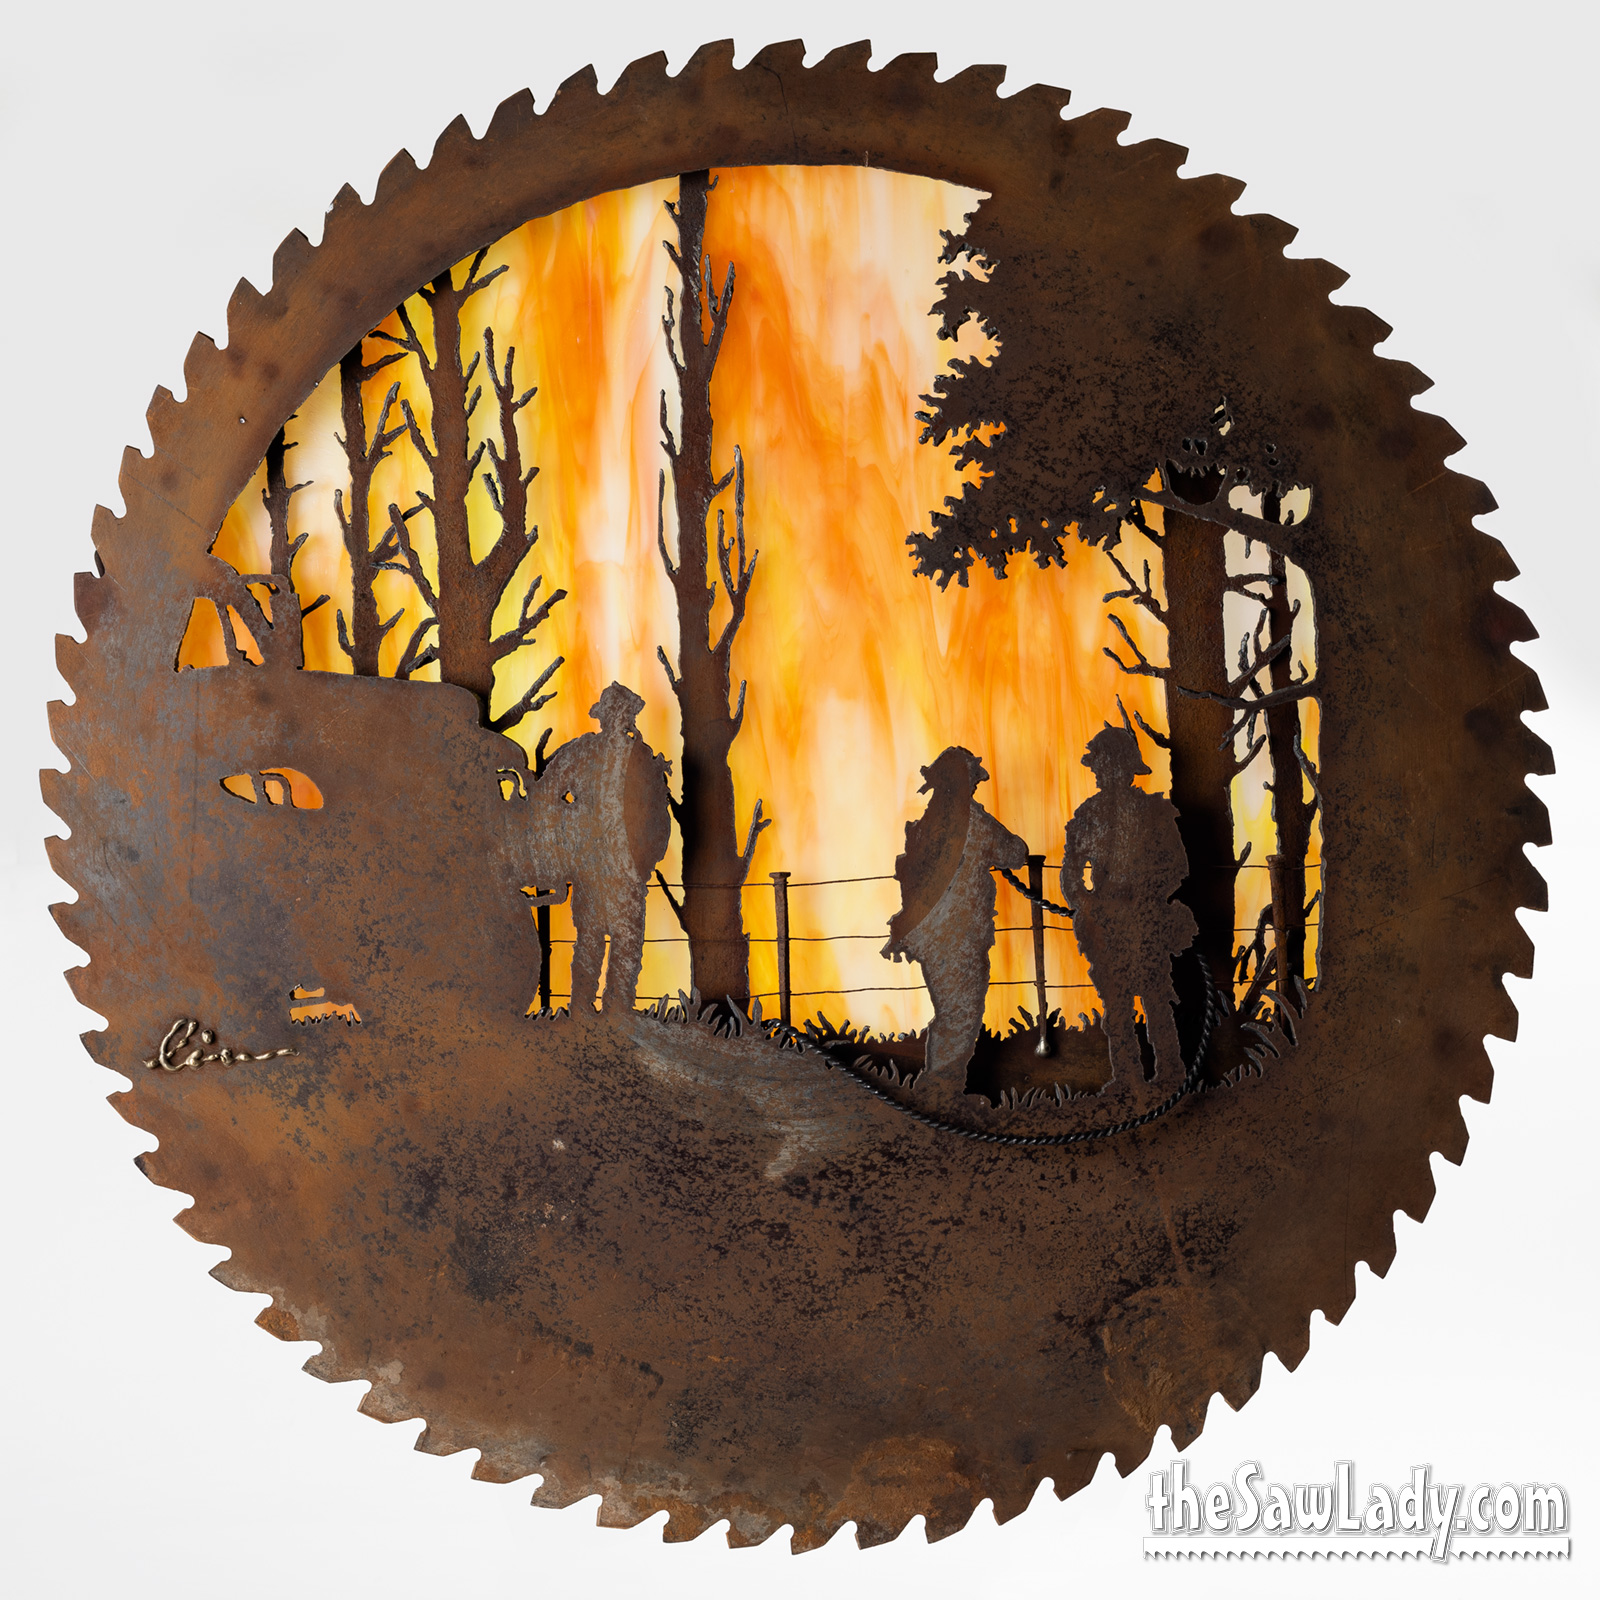 Wildland_Firefighters metal art saw with glass